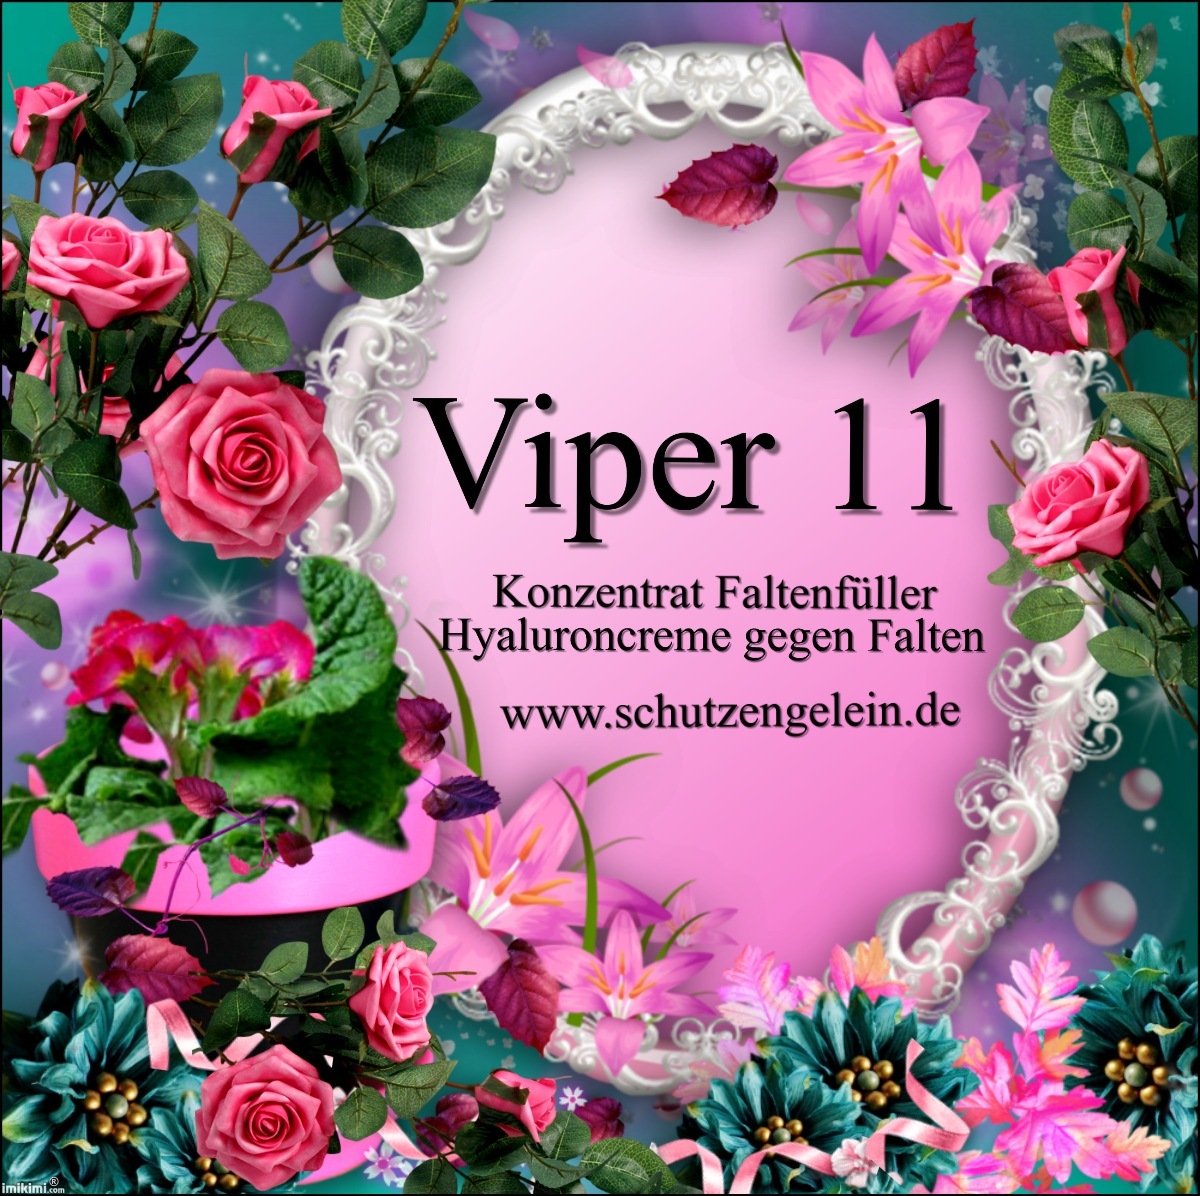 Hyaluroncreme_gegen_Falten,_Konzentrat_Faltenfueller,_Viper_11_www.schutzengelein.de